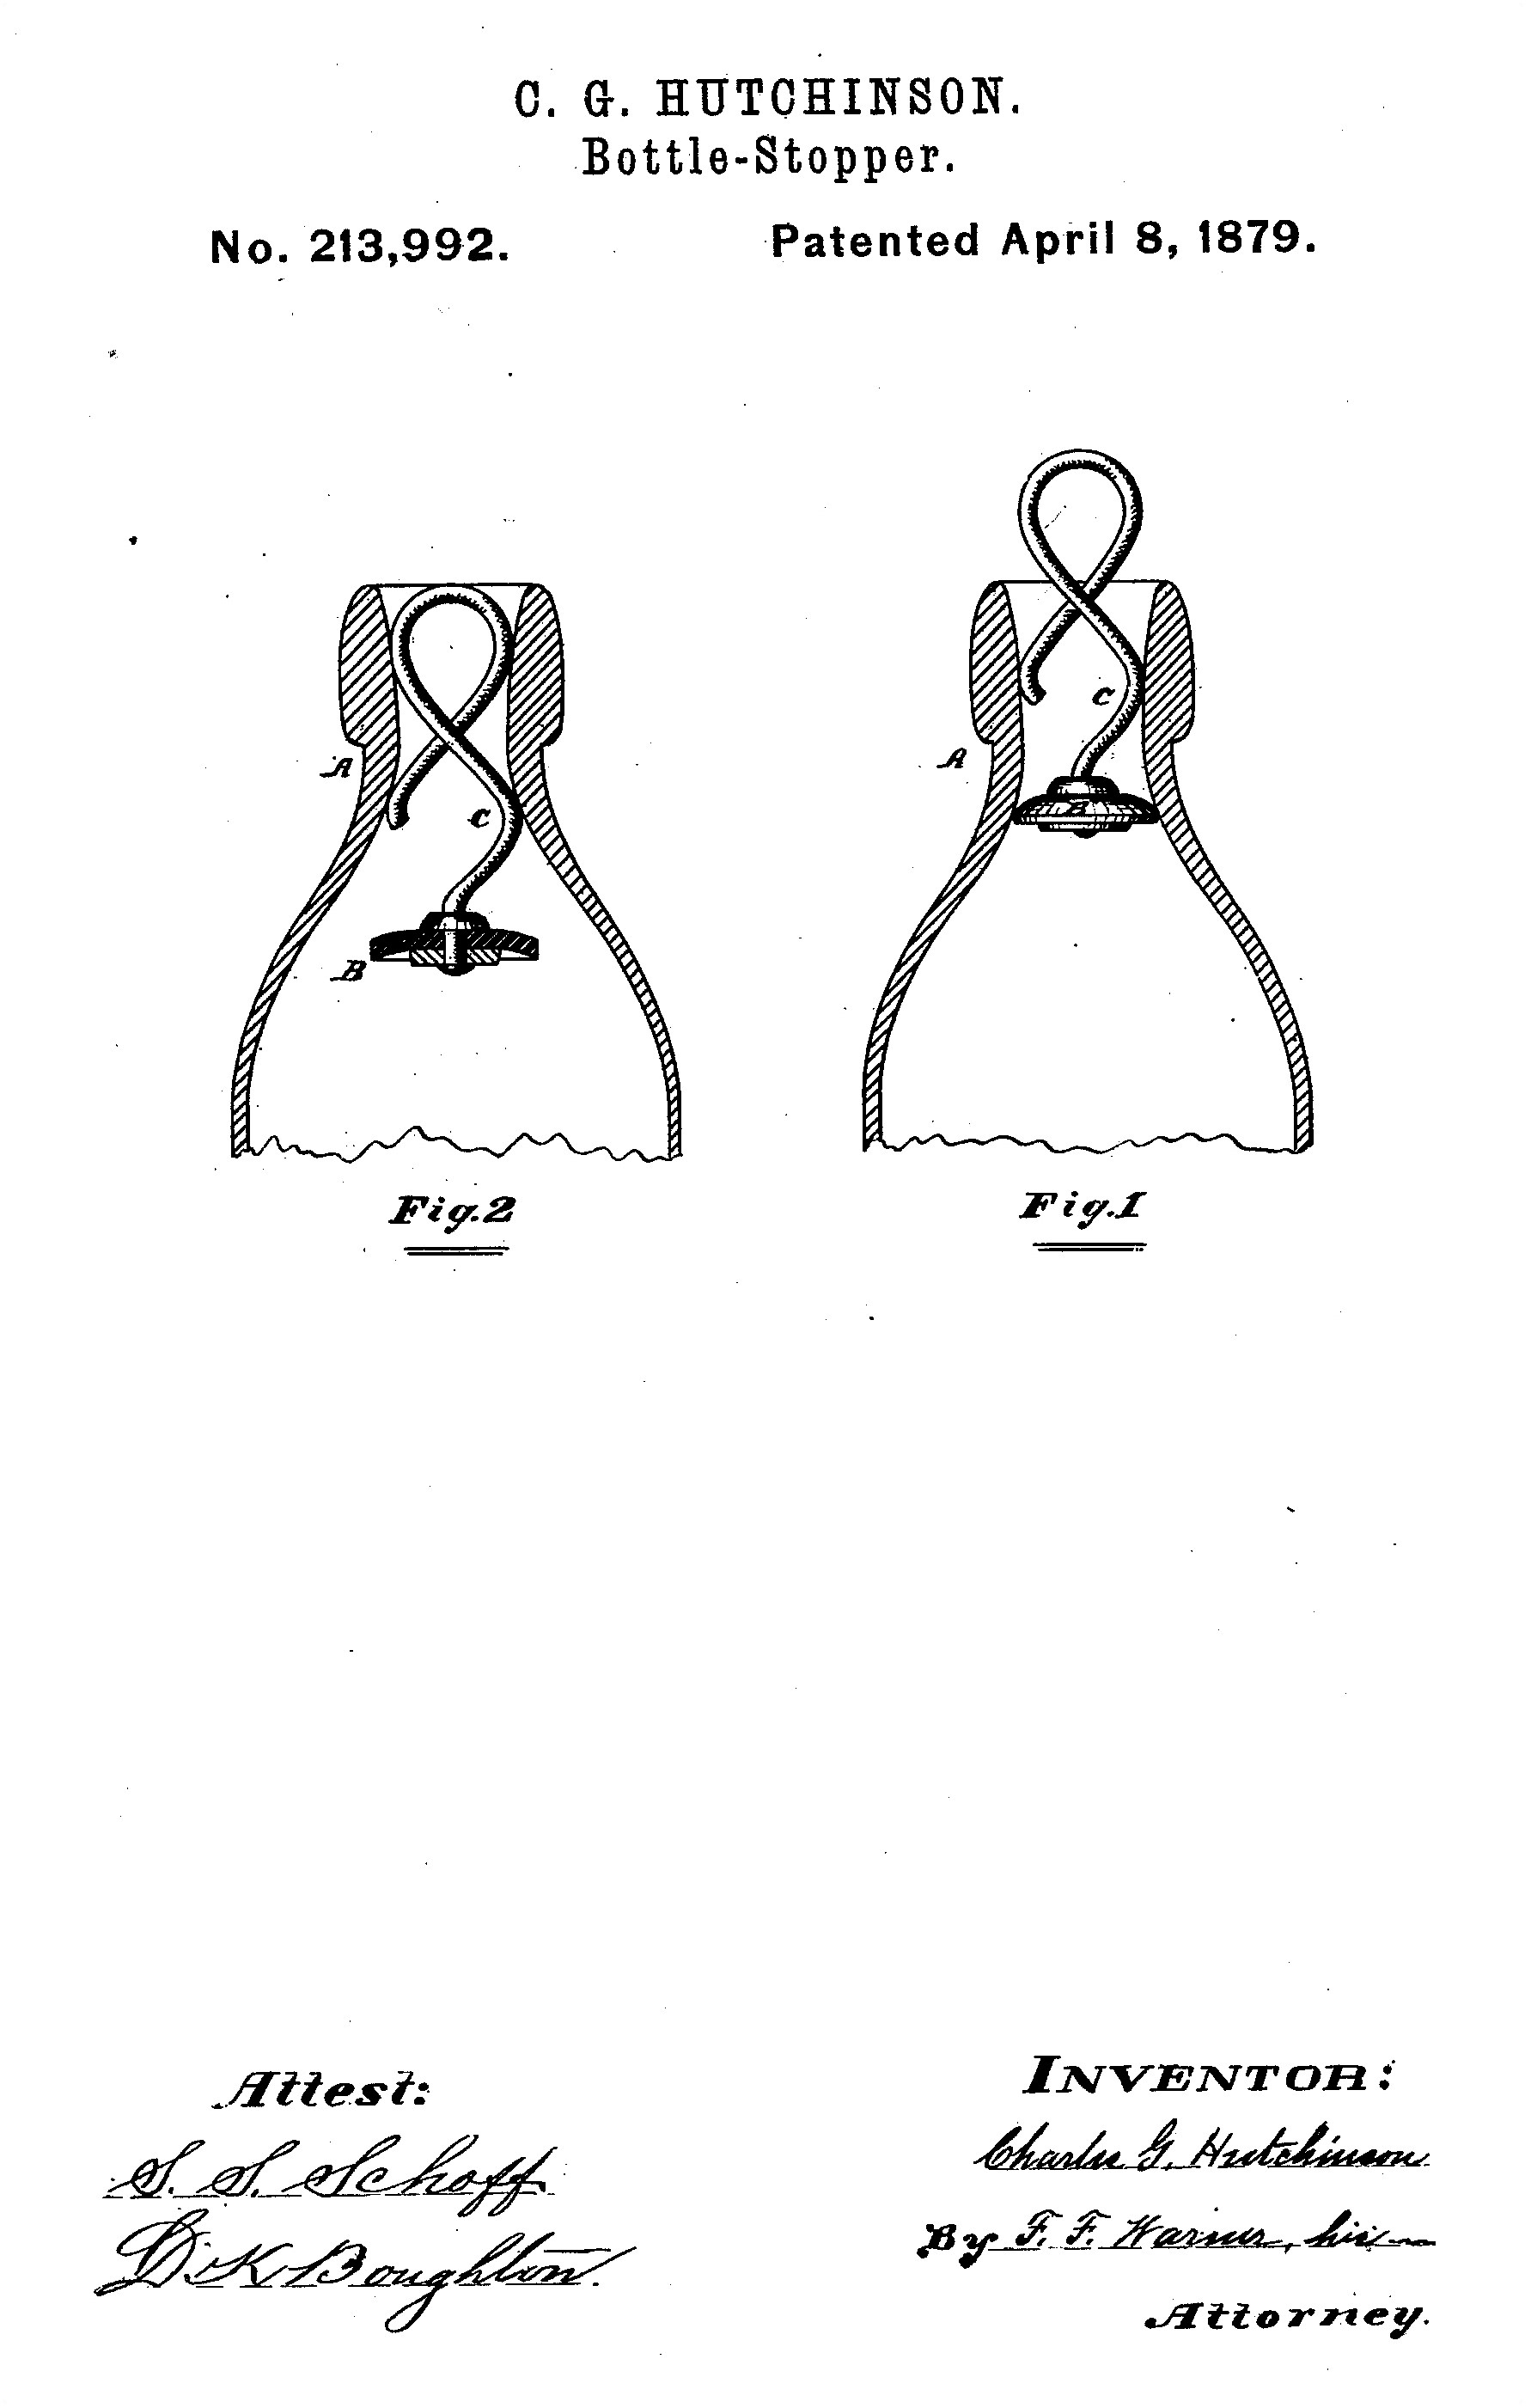 Hutchinson Bottle Patent 1879 (2).jpg